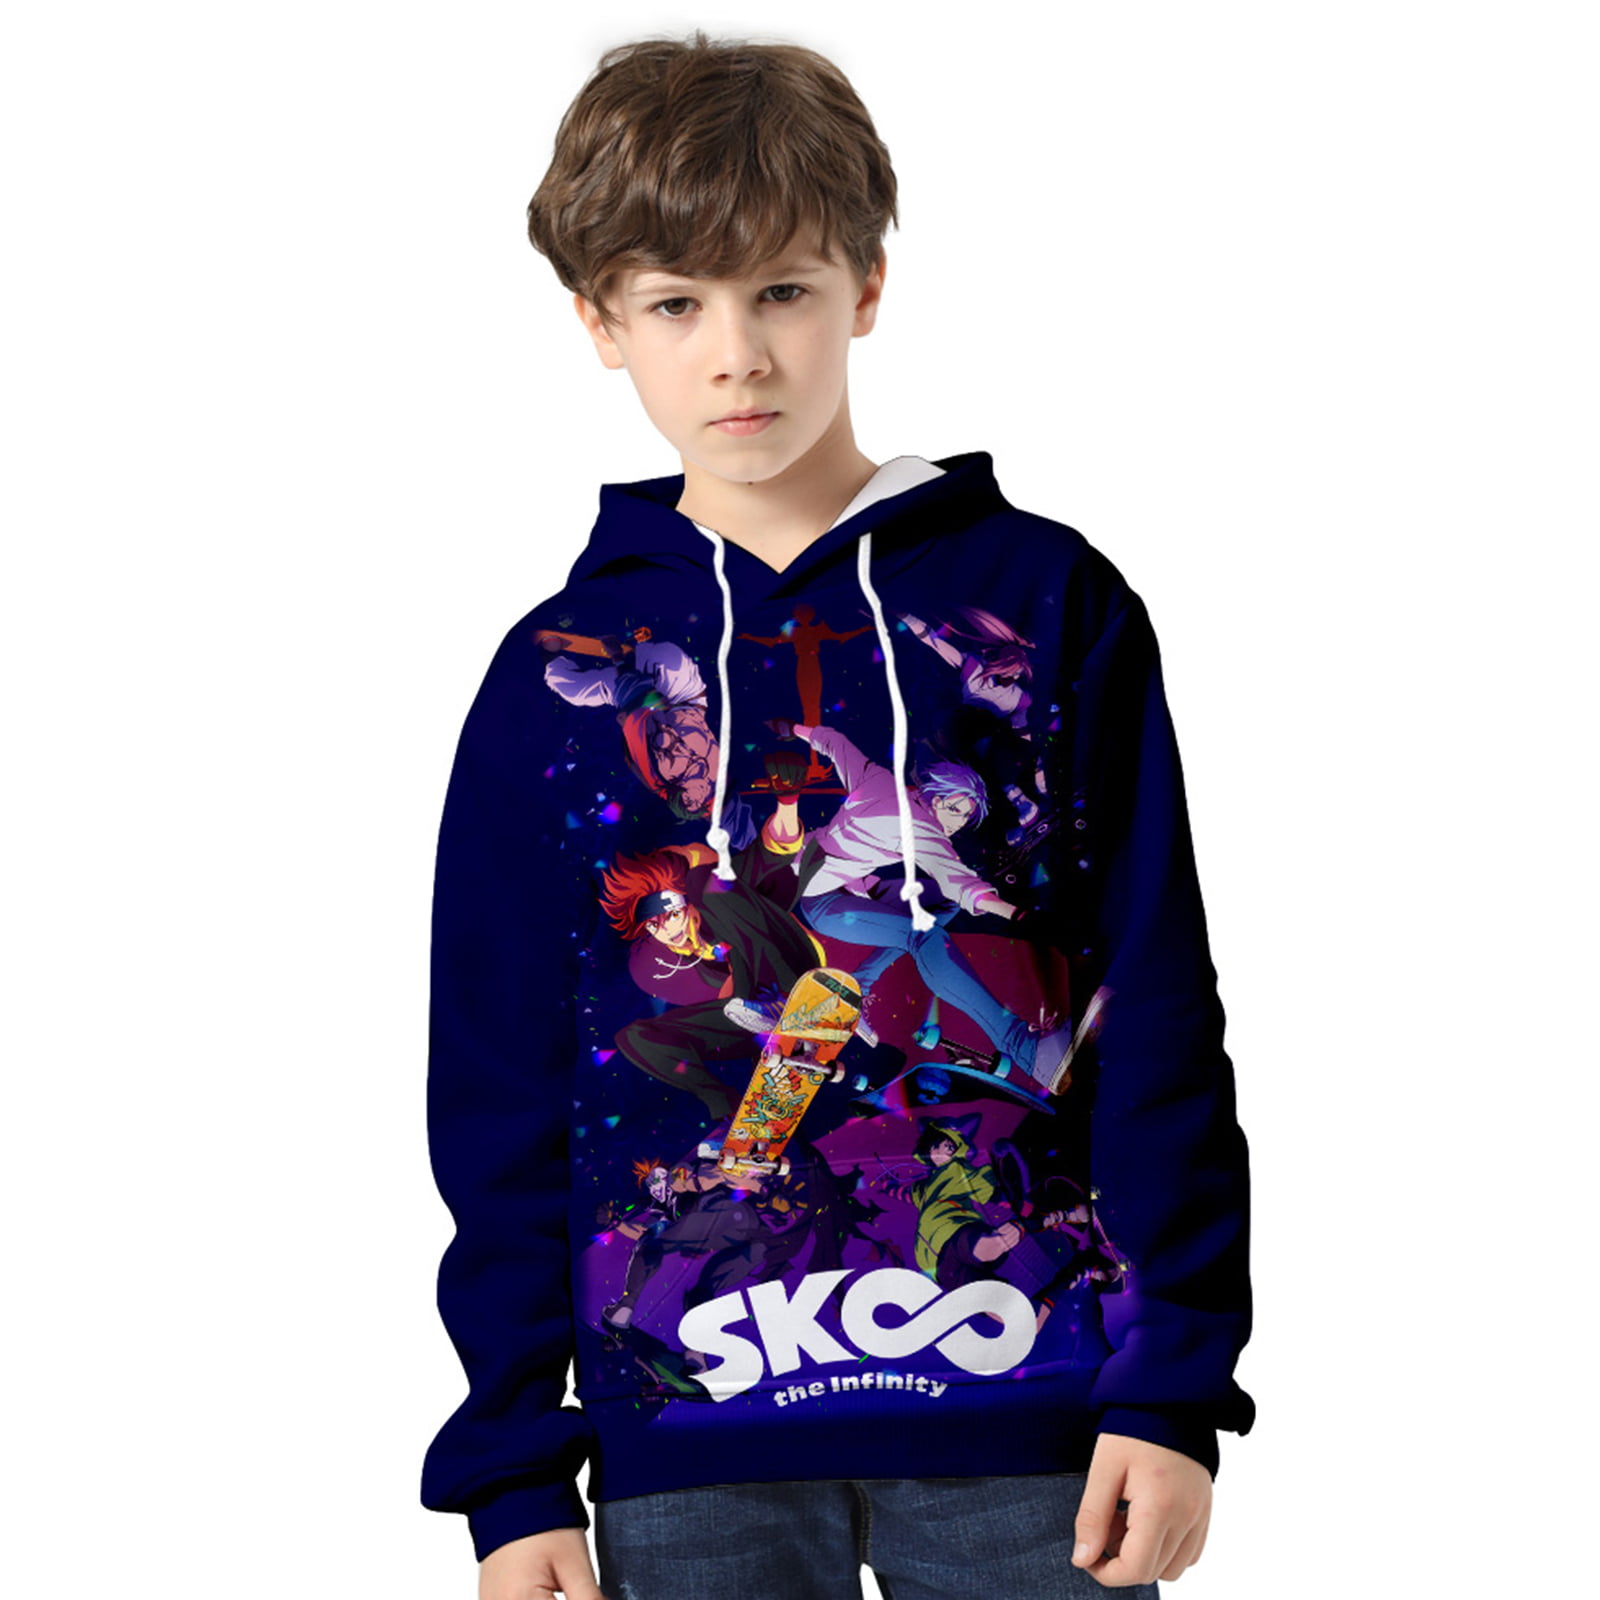 Imbry Boy Christmas 3D Printed Hoodie Kids Animal Pullover Sweatshirt Jacket